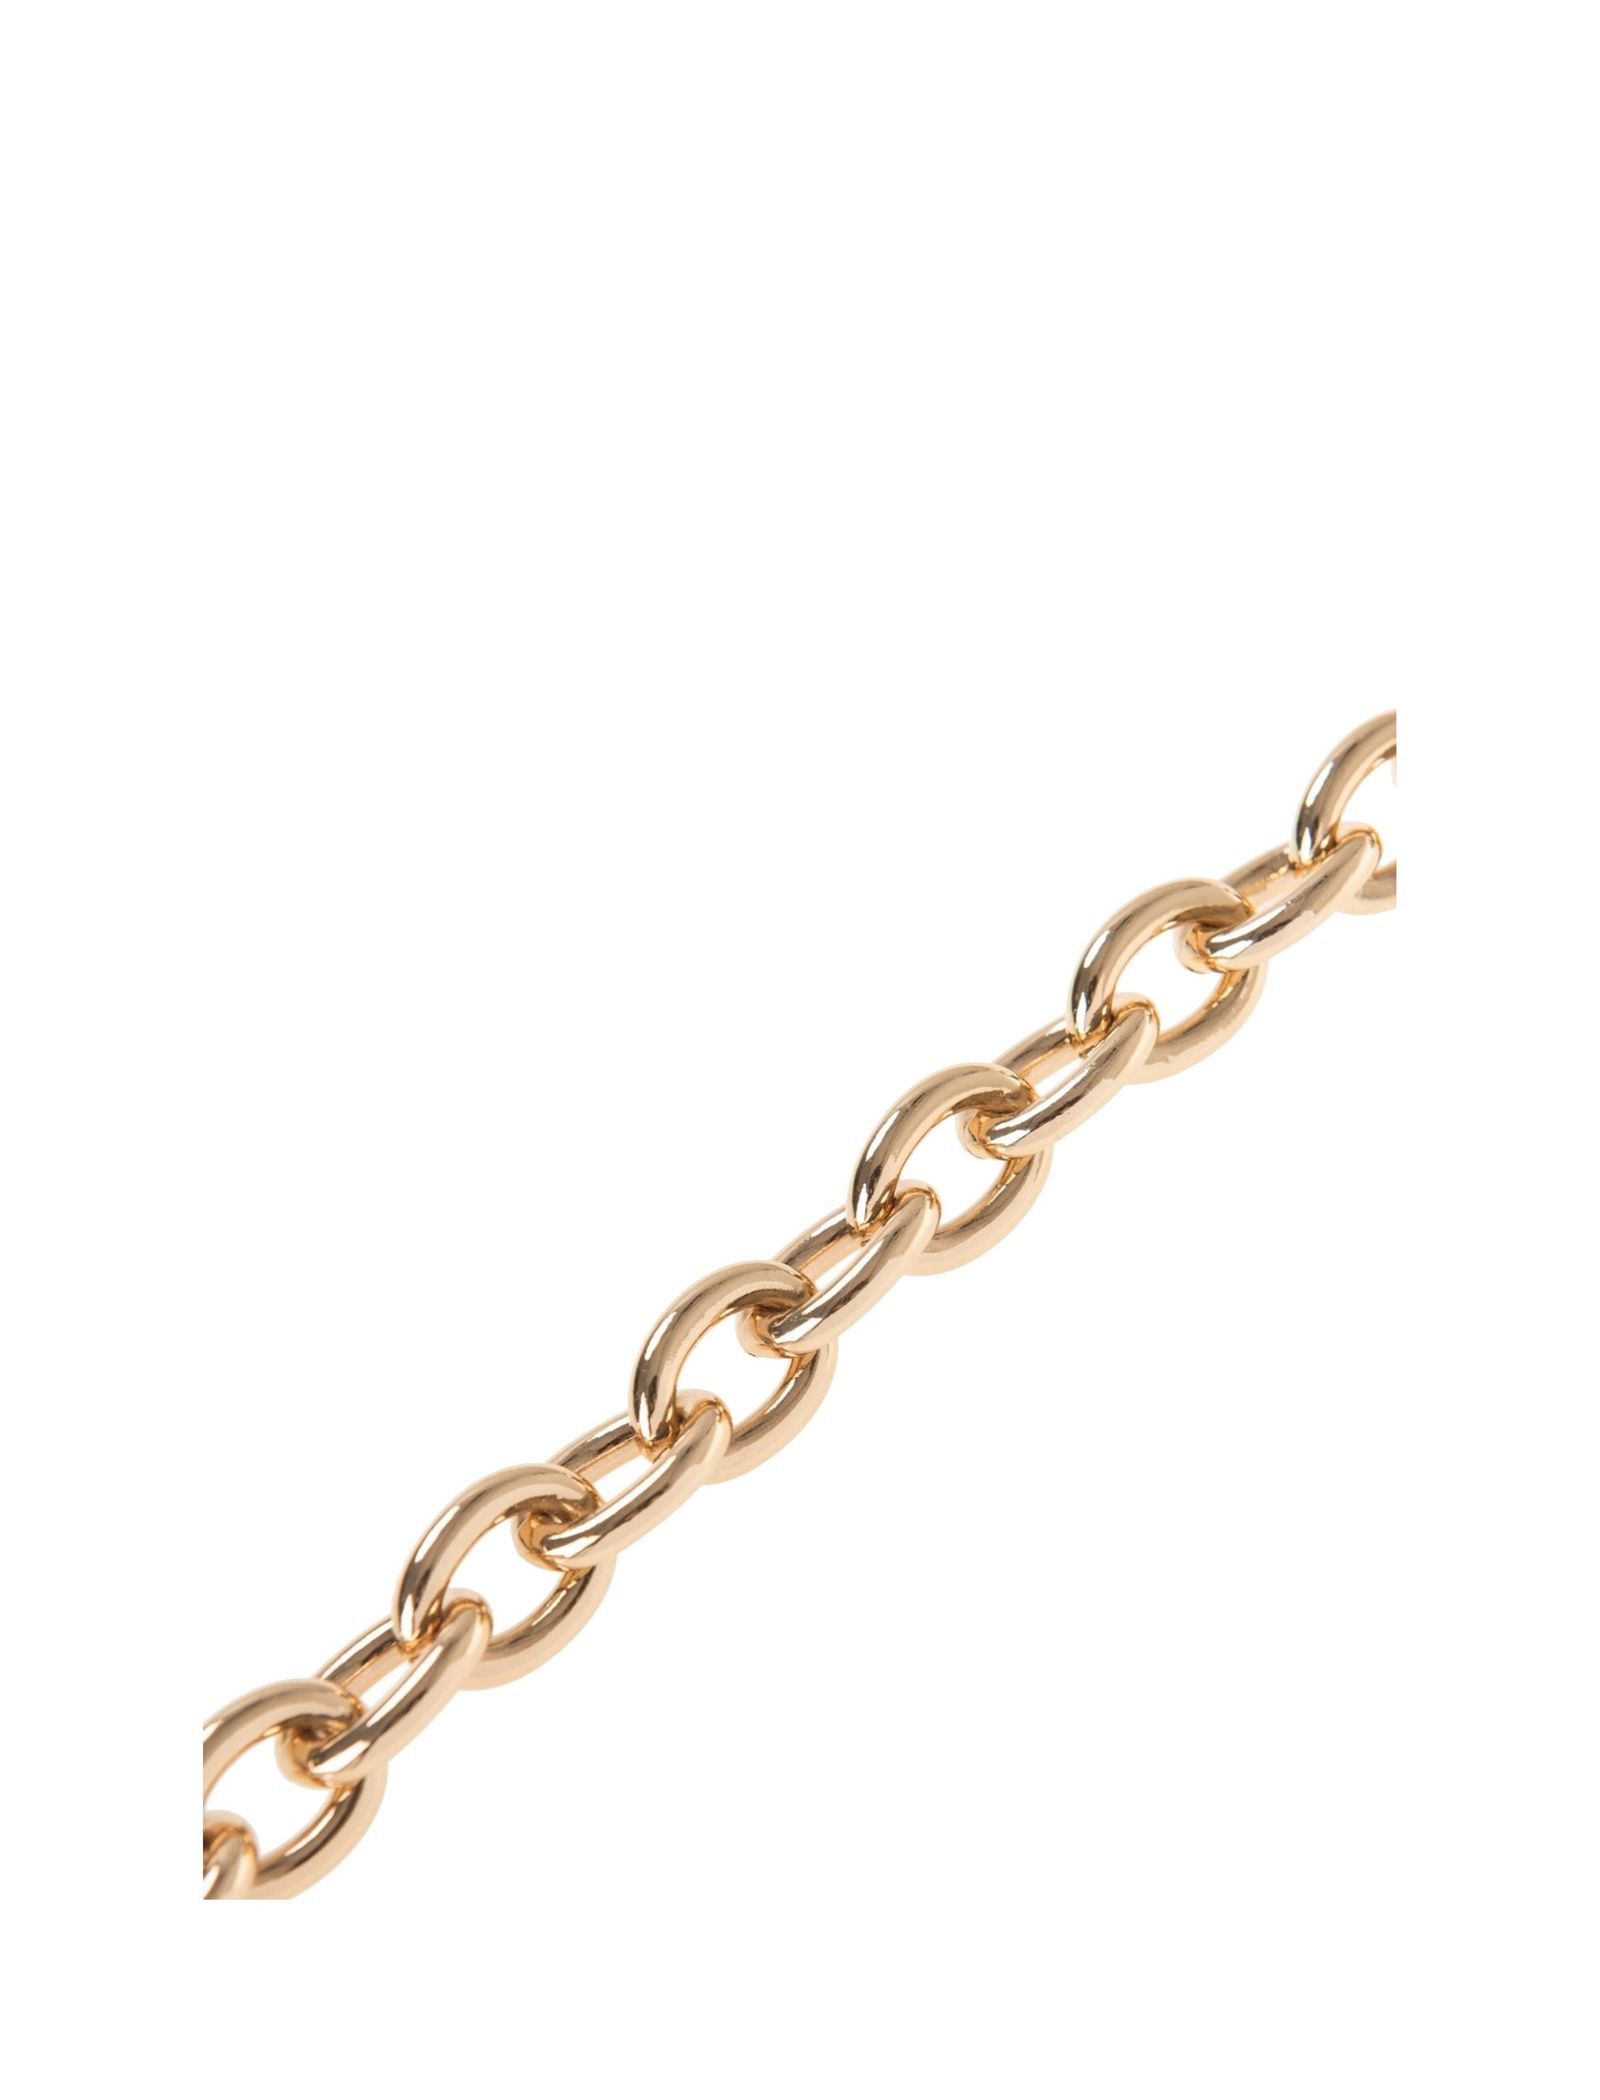 گردنبند زنجیری زنانه - پارفوا - طلايي - 3